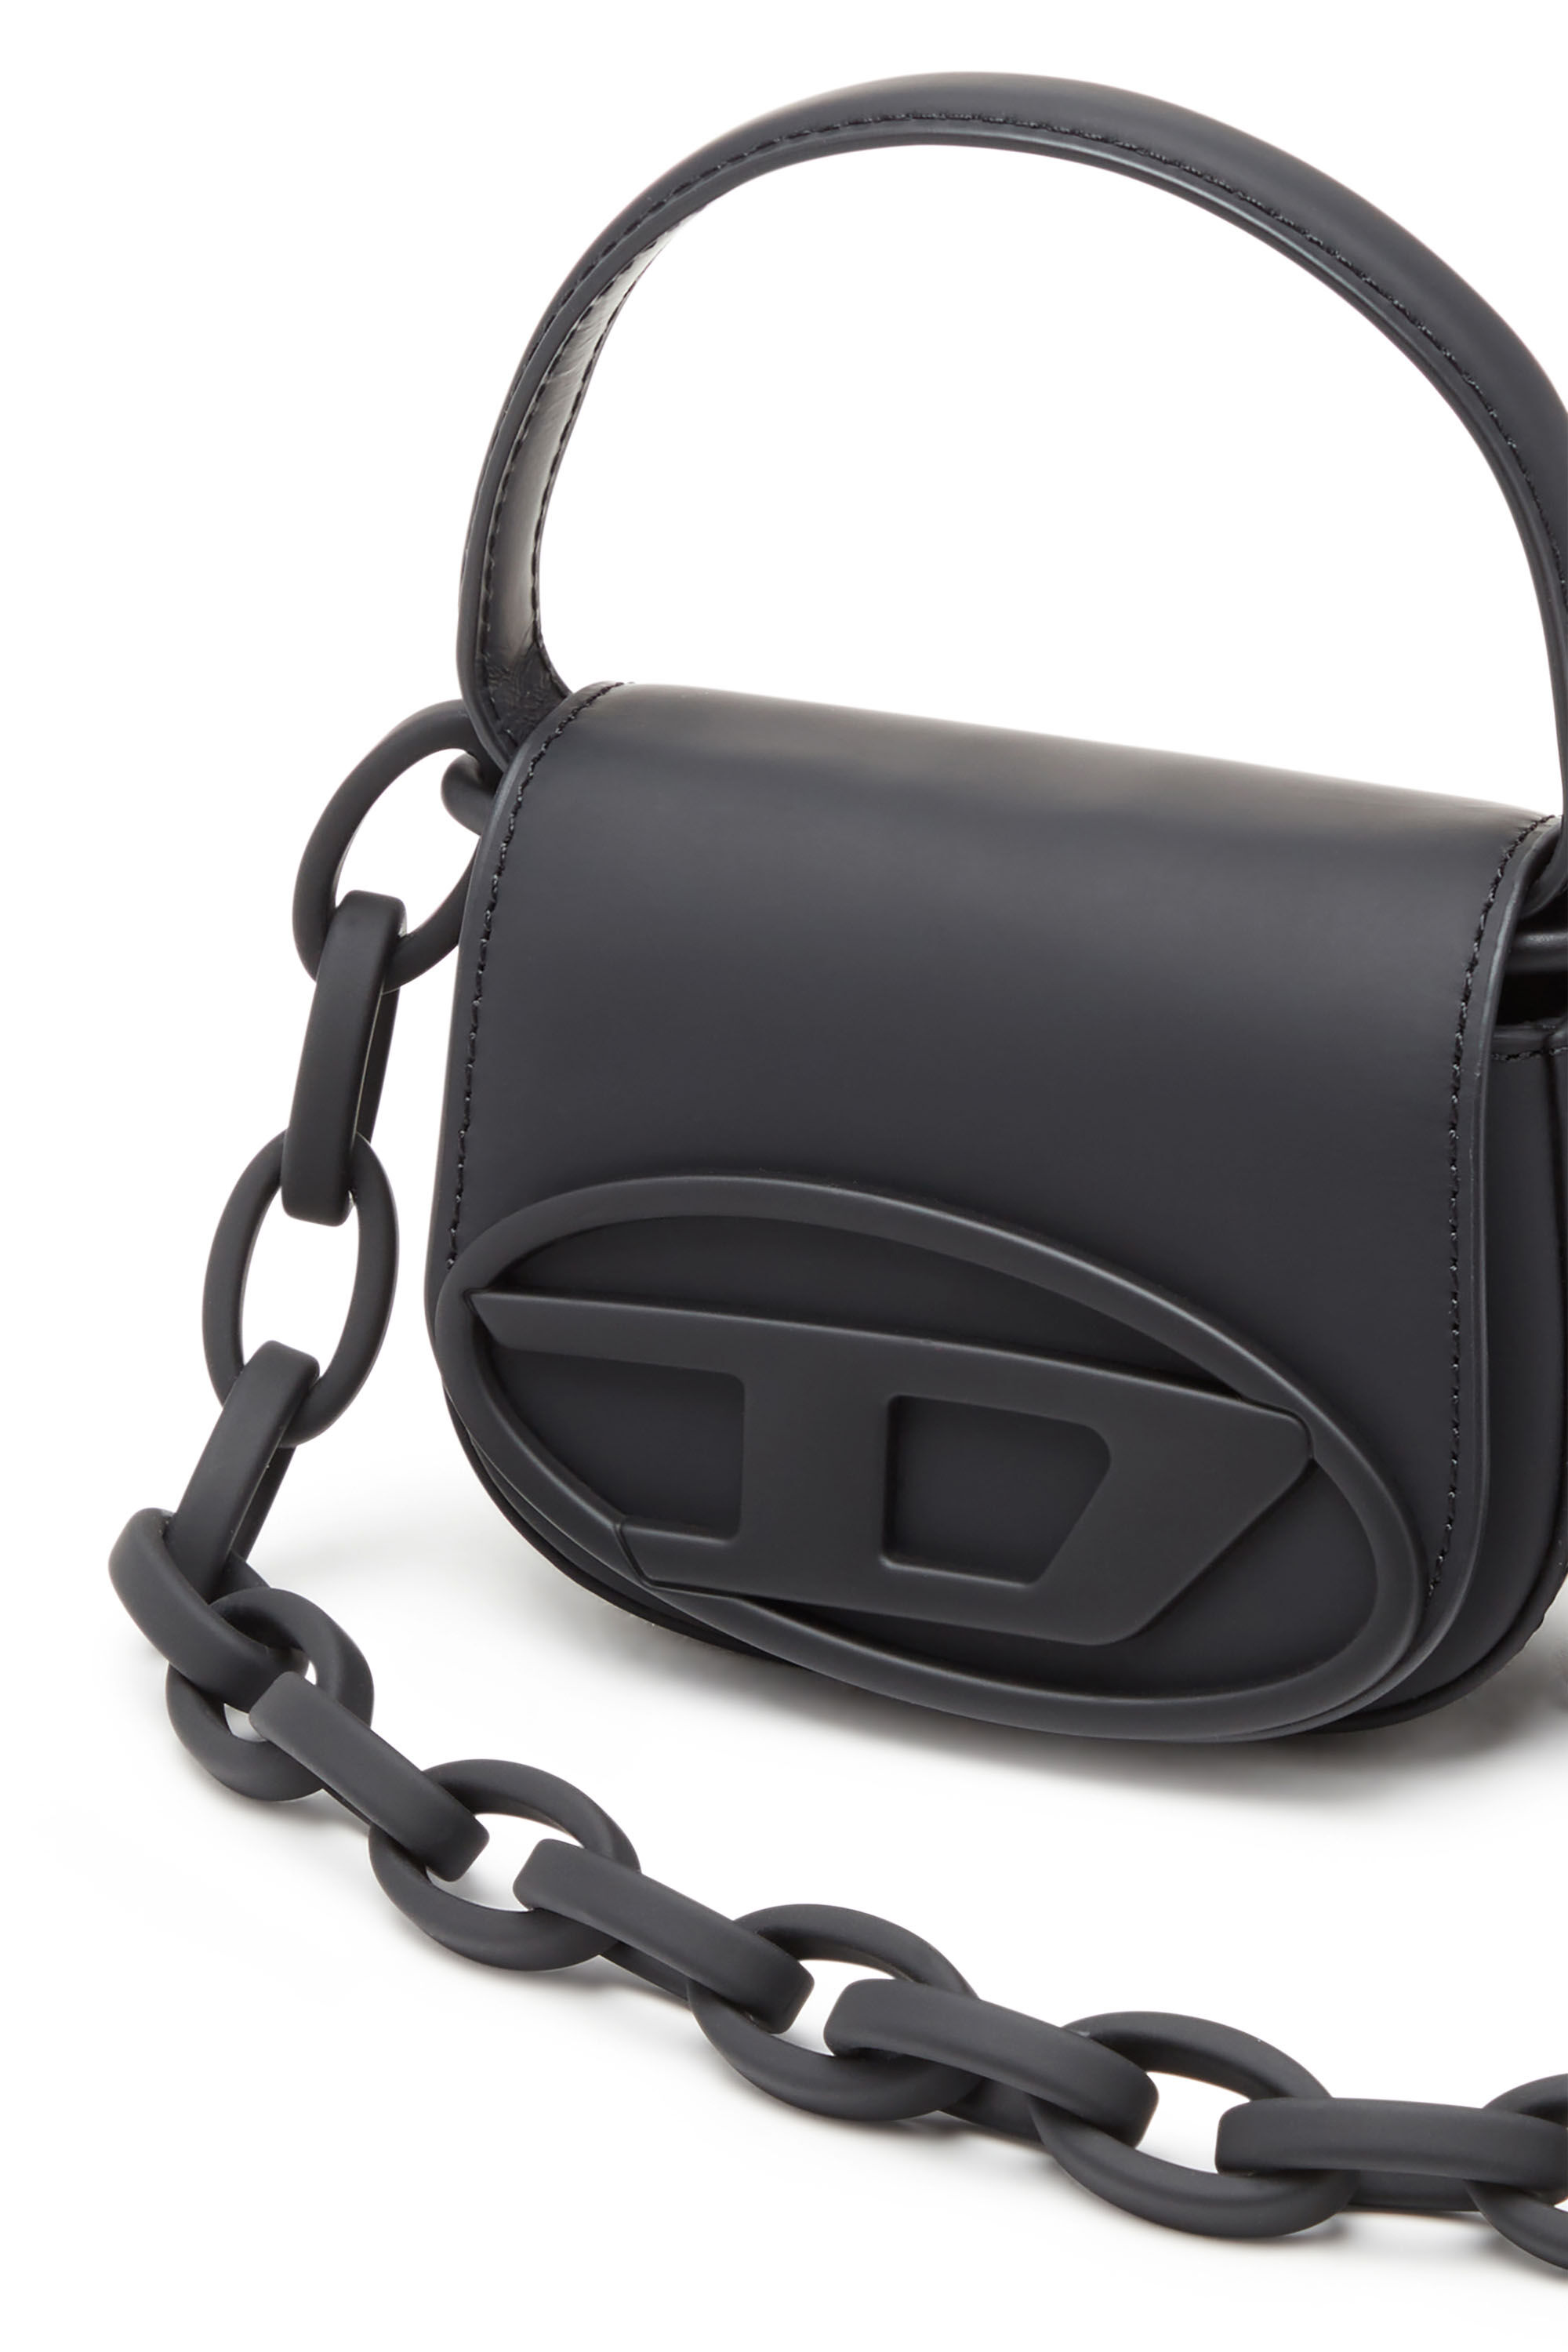 Women's 1DR Xs - Iconic mini bag in matte leather | Black | Diesel